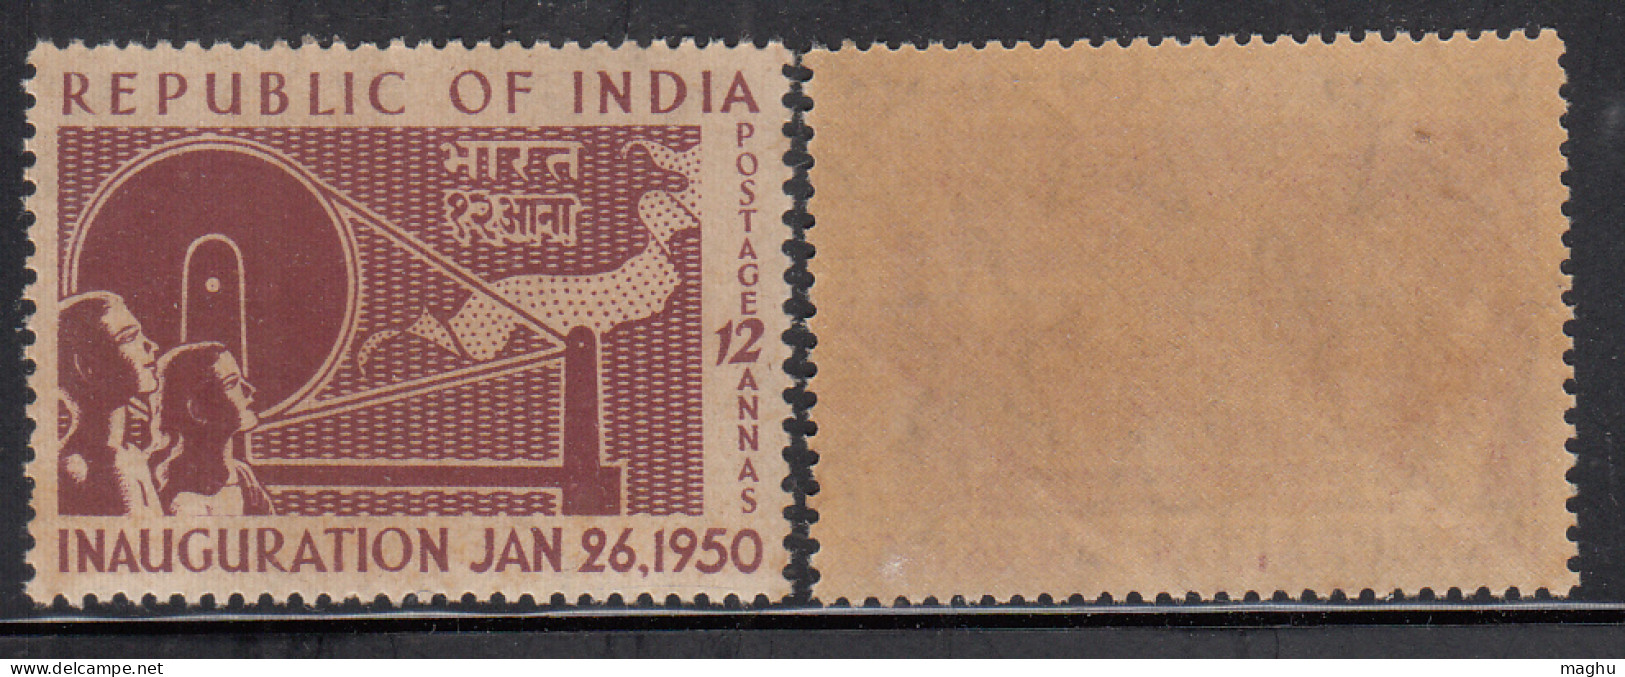 12a Republic Inaguration, India MNH 1950, Gandhi Used Charkha Spinning Wheel & Cloth, Textile, Cotton Yurn Spun Khadi,  - Unused Stamps